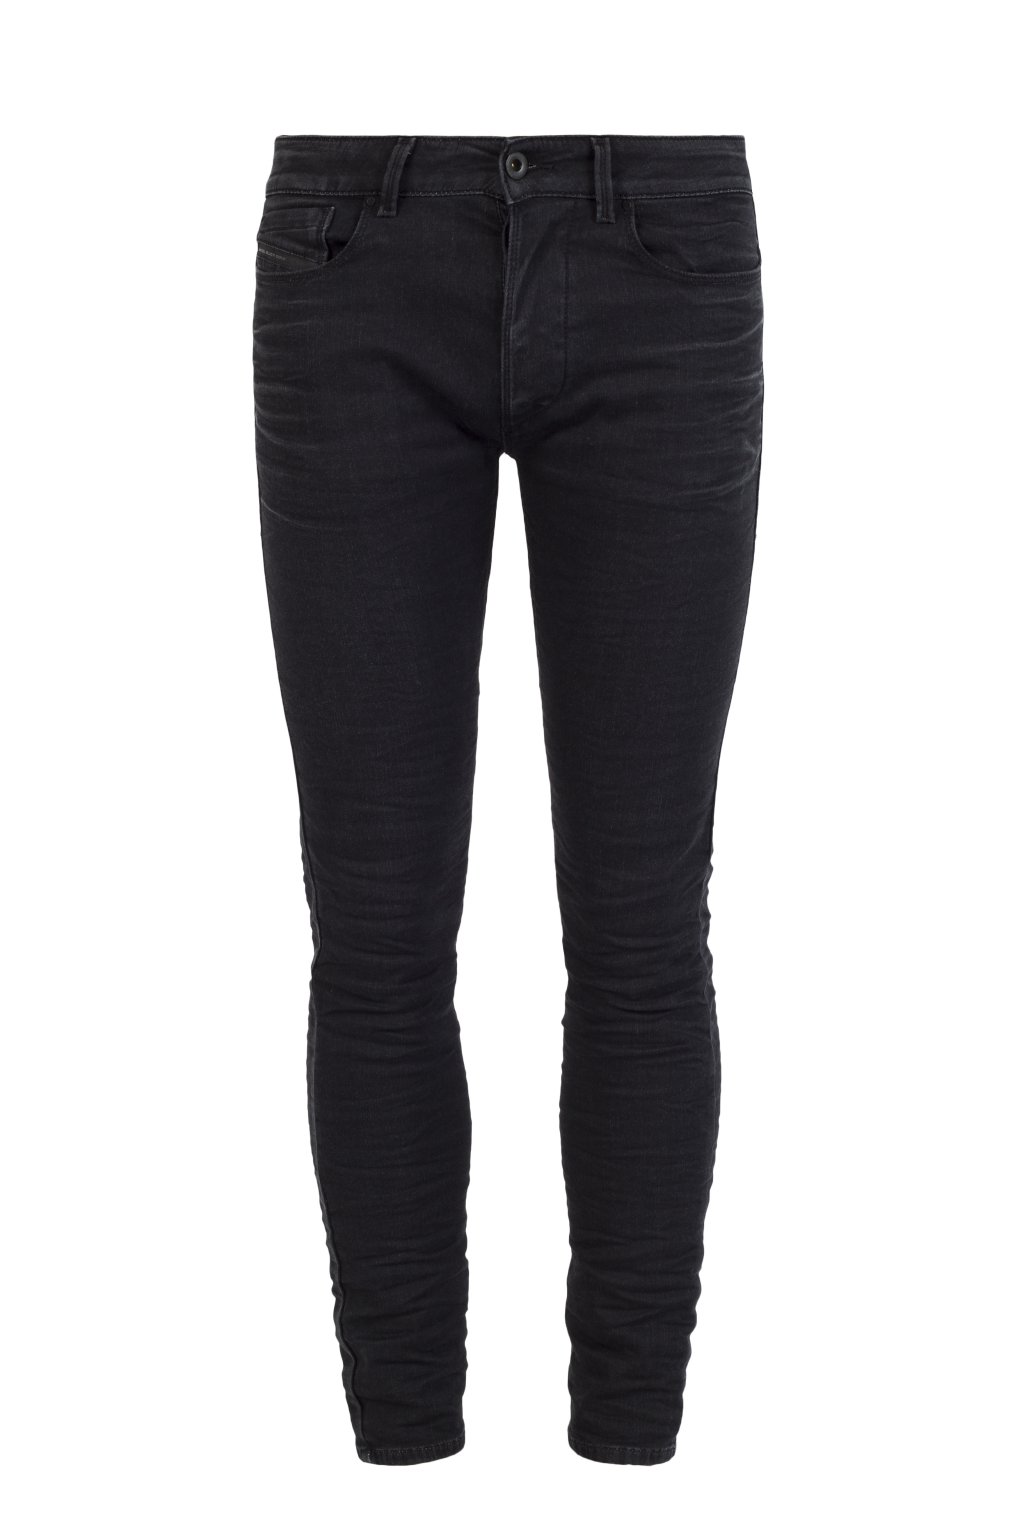 Diesel Black Gold 'Type-2628' jeans | Men's Clothing | Vitkac